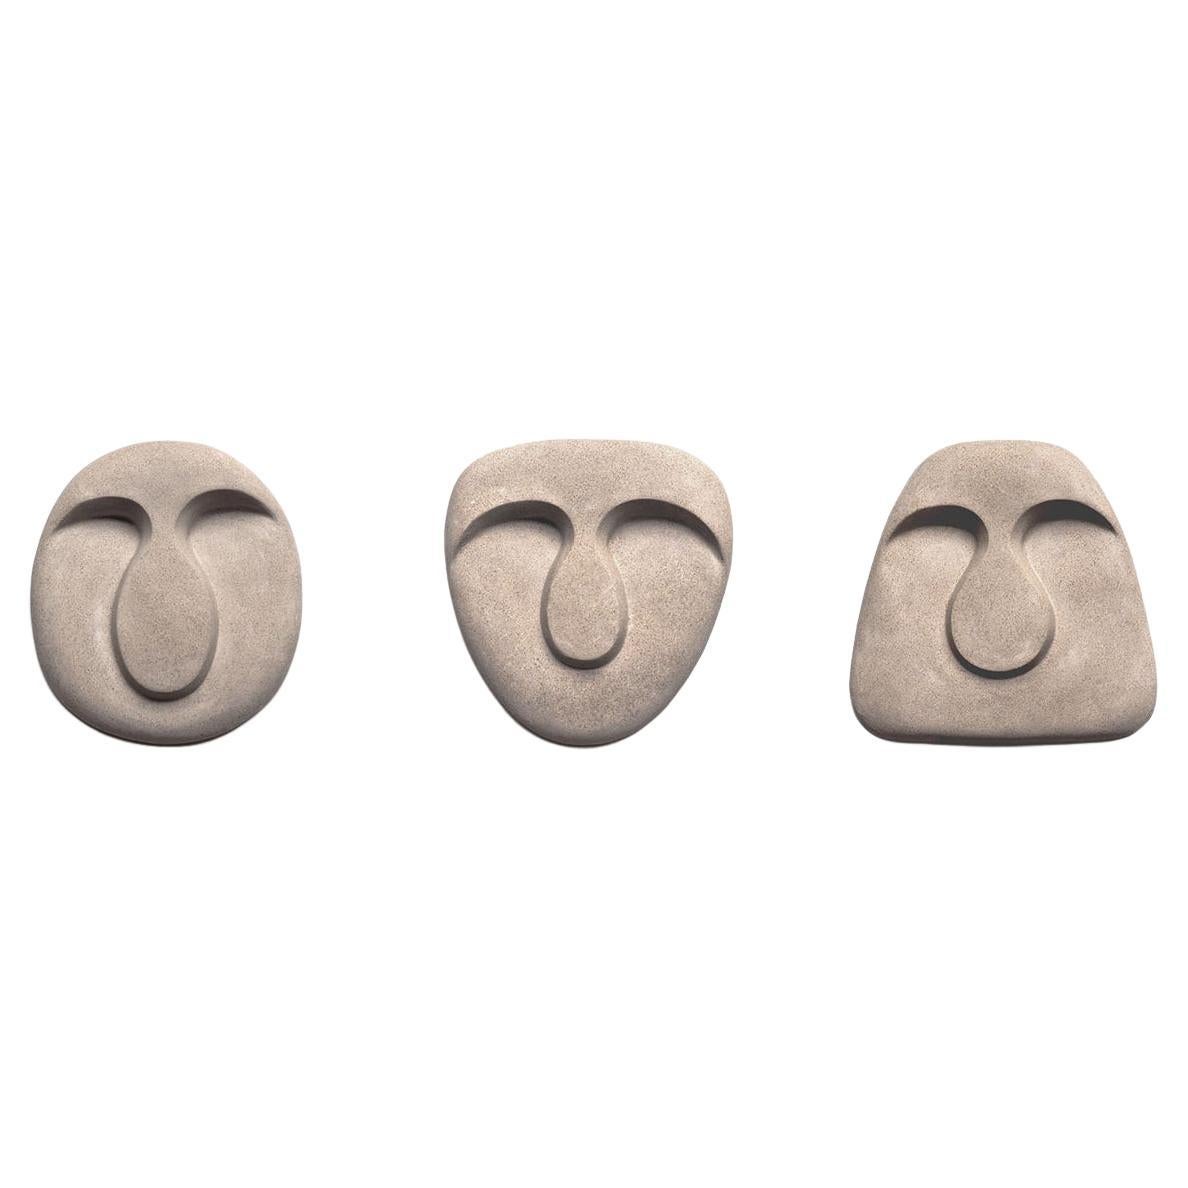 21st Century Set of Wall Sculptures, Handmade Stuccoforte Masks Idoli, Kanz  For Sale